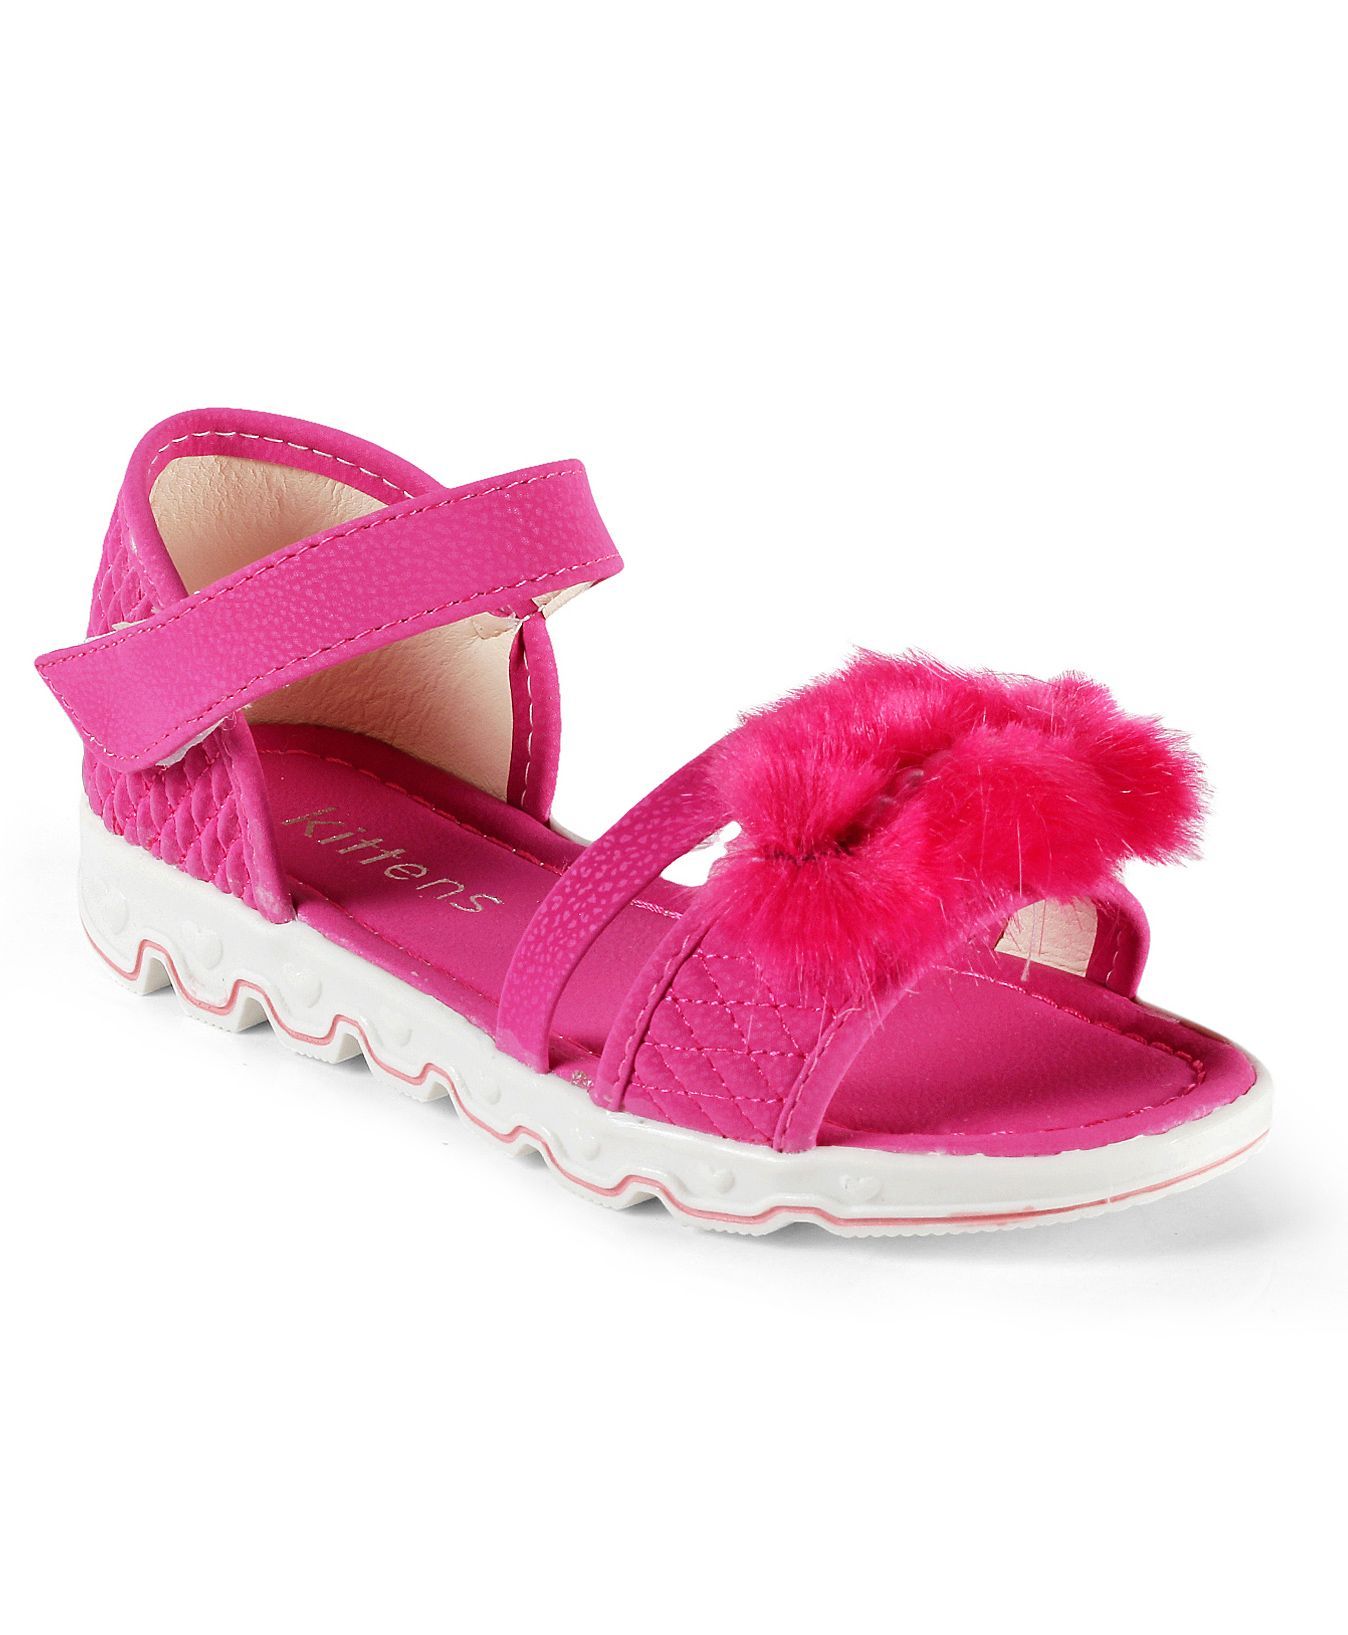 Kittens Shoes Fur \u0026 Pearl Applique 